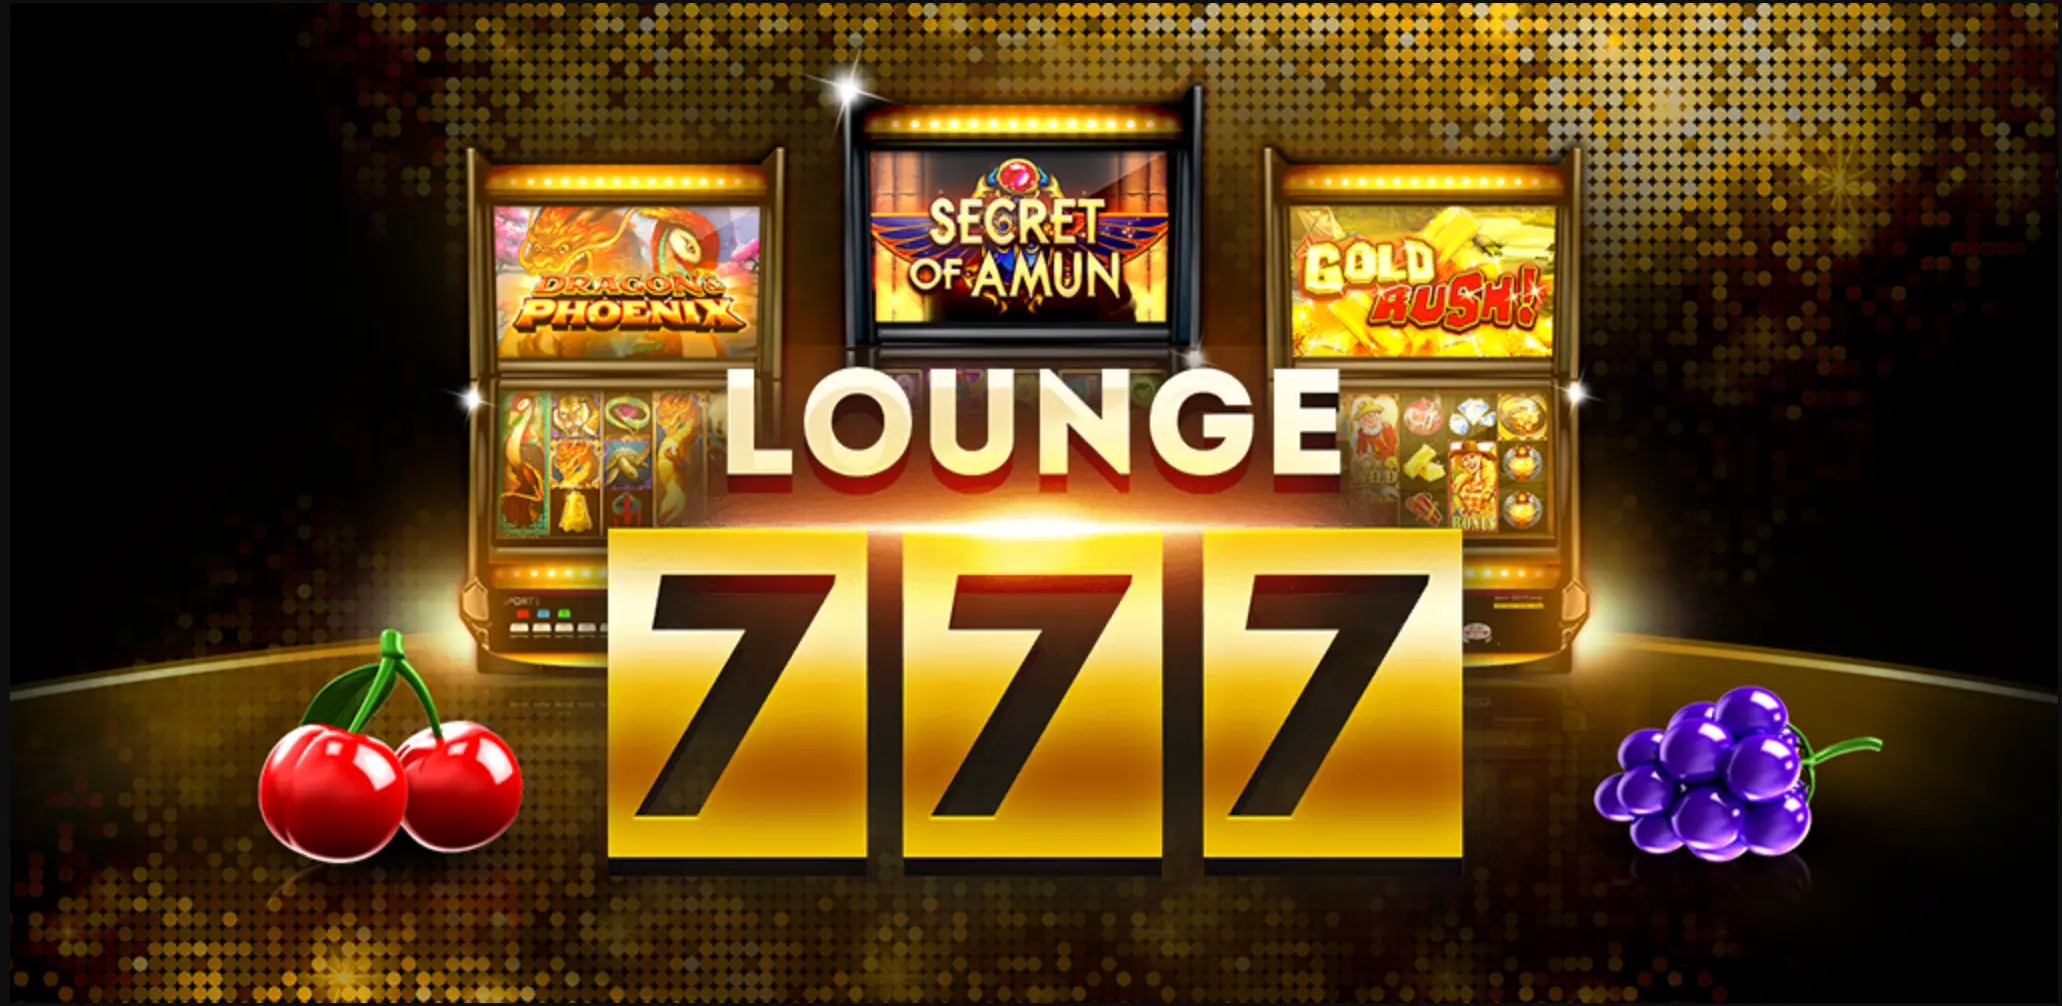 Lounge777 app download